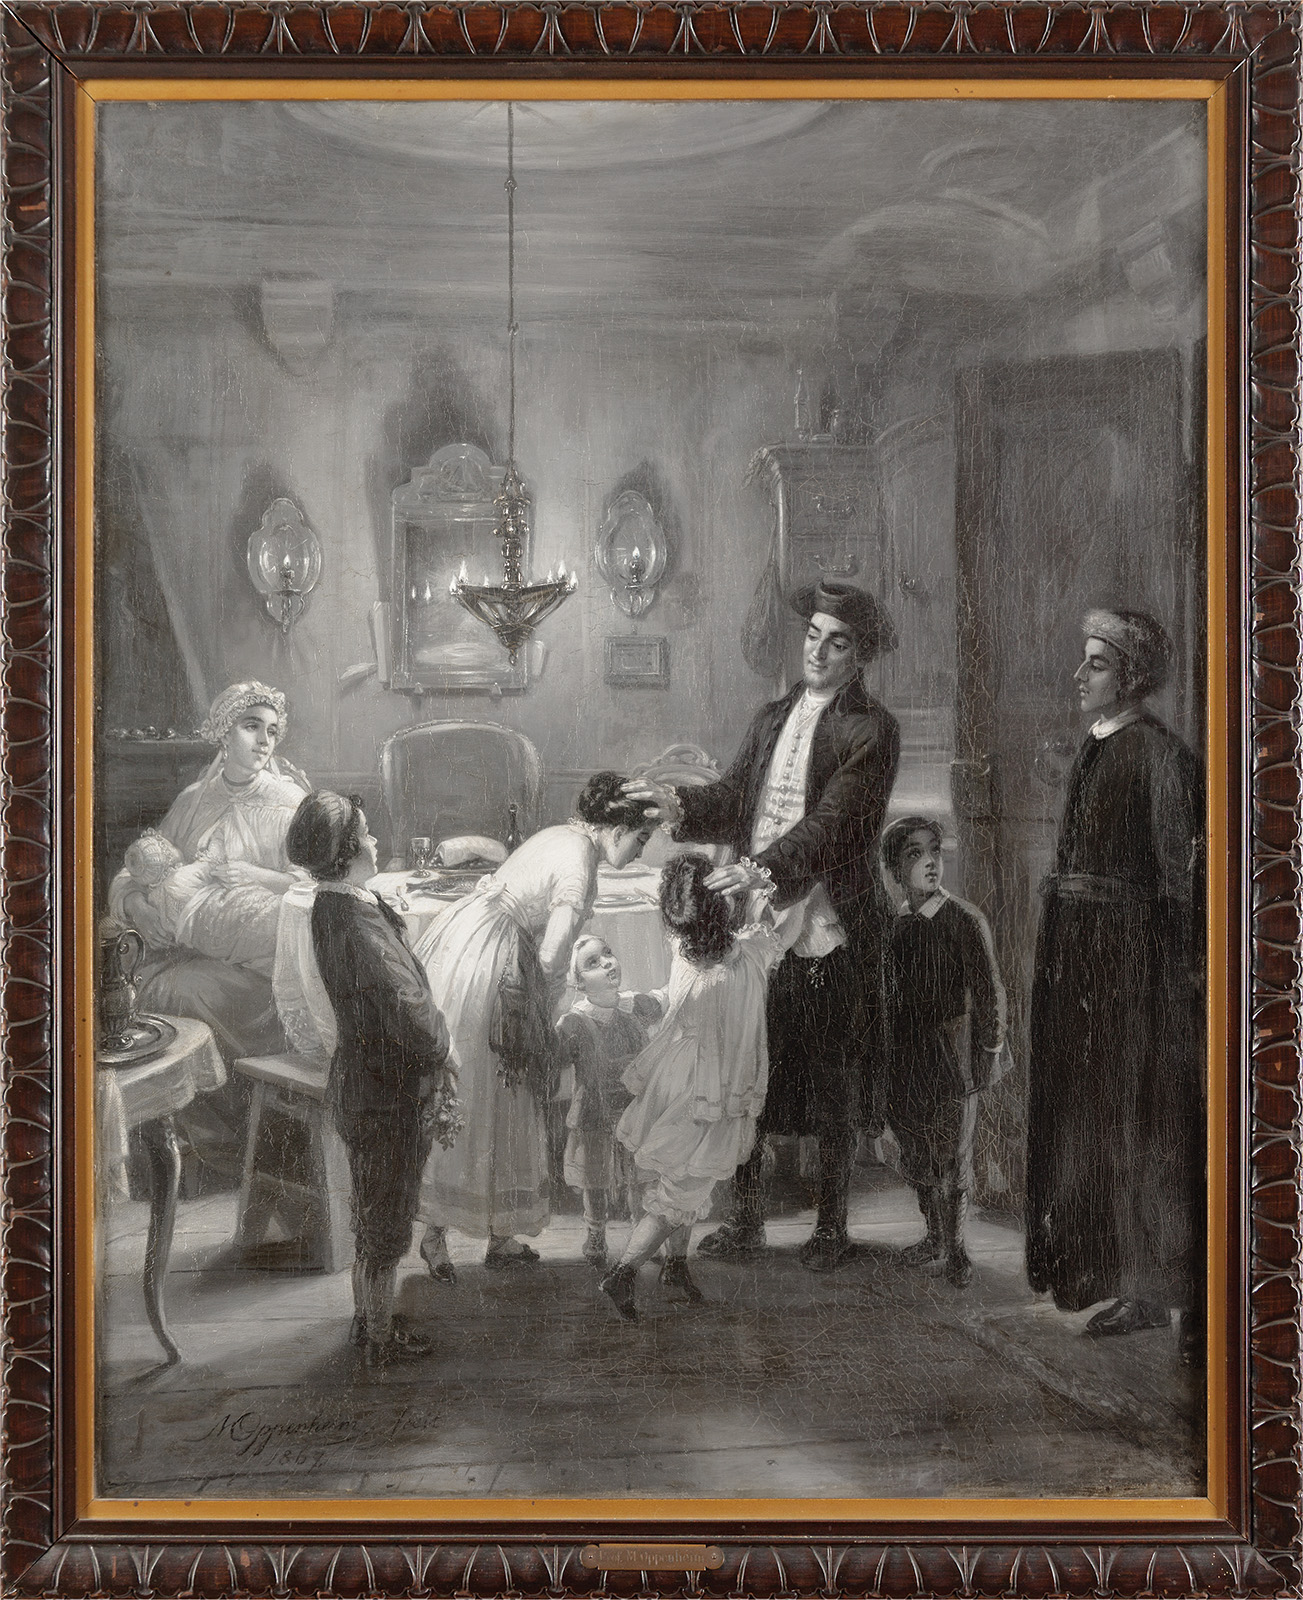 <p>Moritz Oppenheim.</p>
<p>“Freitag Abend.”</p>
<p>Oil on canvas. 1867.</p>
<p>Sold at auction 16th December, 2015.</p>
<p>Hammer-price: $380,000.</p>